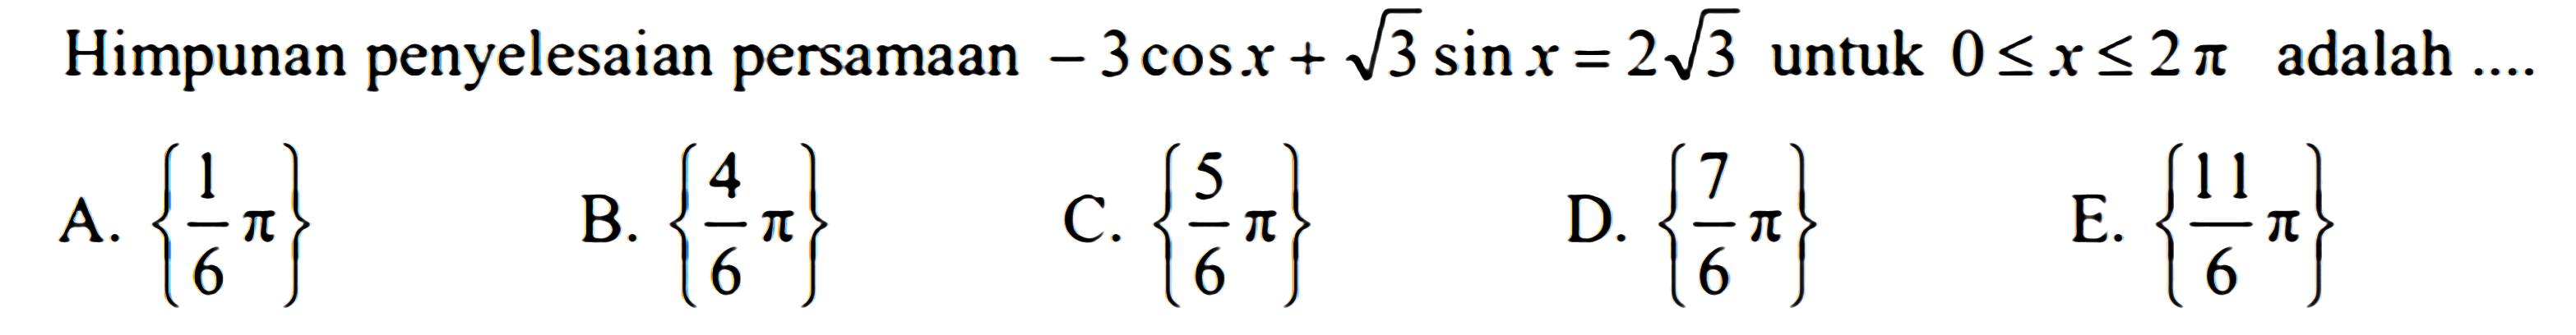 Himpunan penyelesaian persamaan -3cos+3^(1/2)sinx = 2 3^(1/2) untuk 0<=x<=2phi adalah a.{1phi/6} b.{4phi/6} c.{5phi/6} d.{7phi/6} e.{11phi/6}